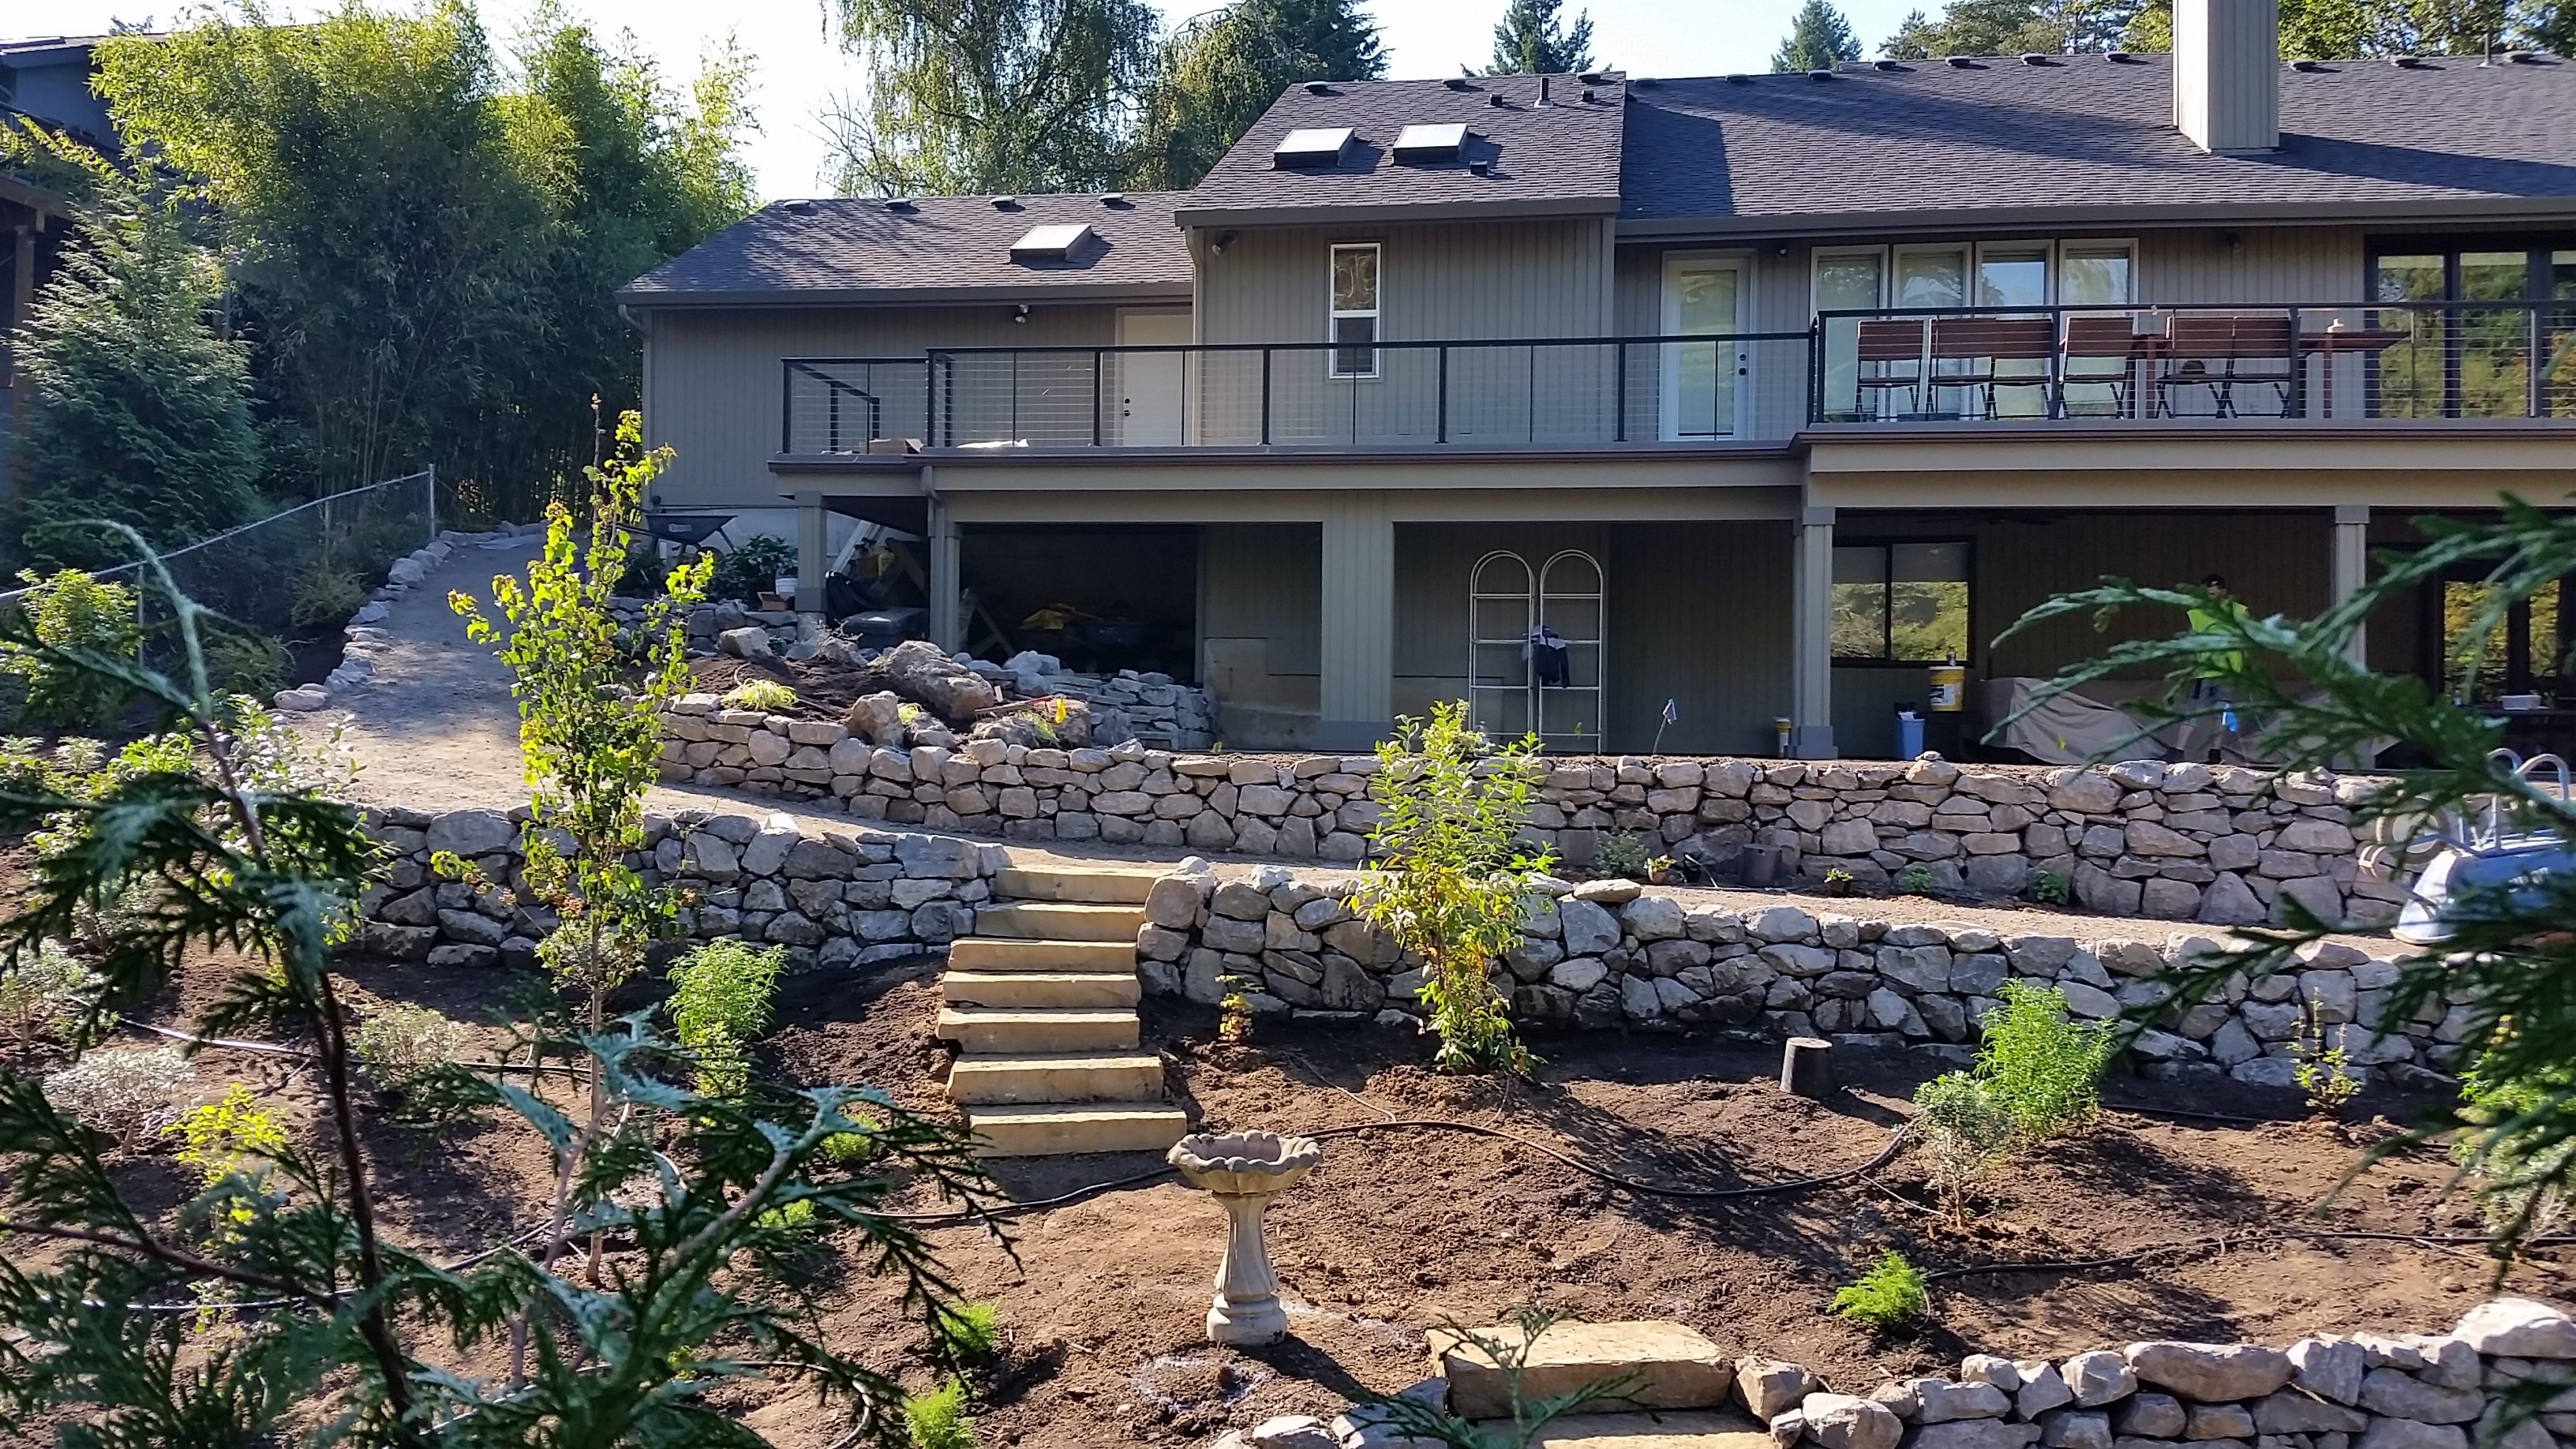 custom backyard landscaping- stone steps- rock walls- drip irrigation- gravel pathways- planting